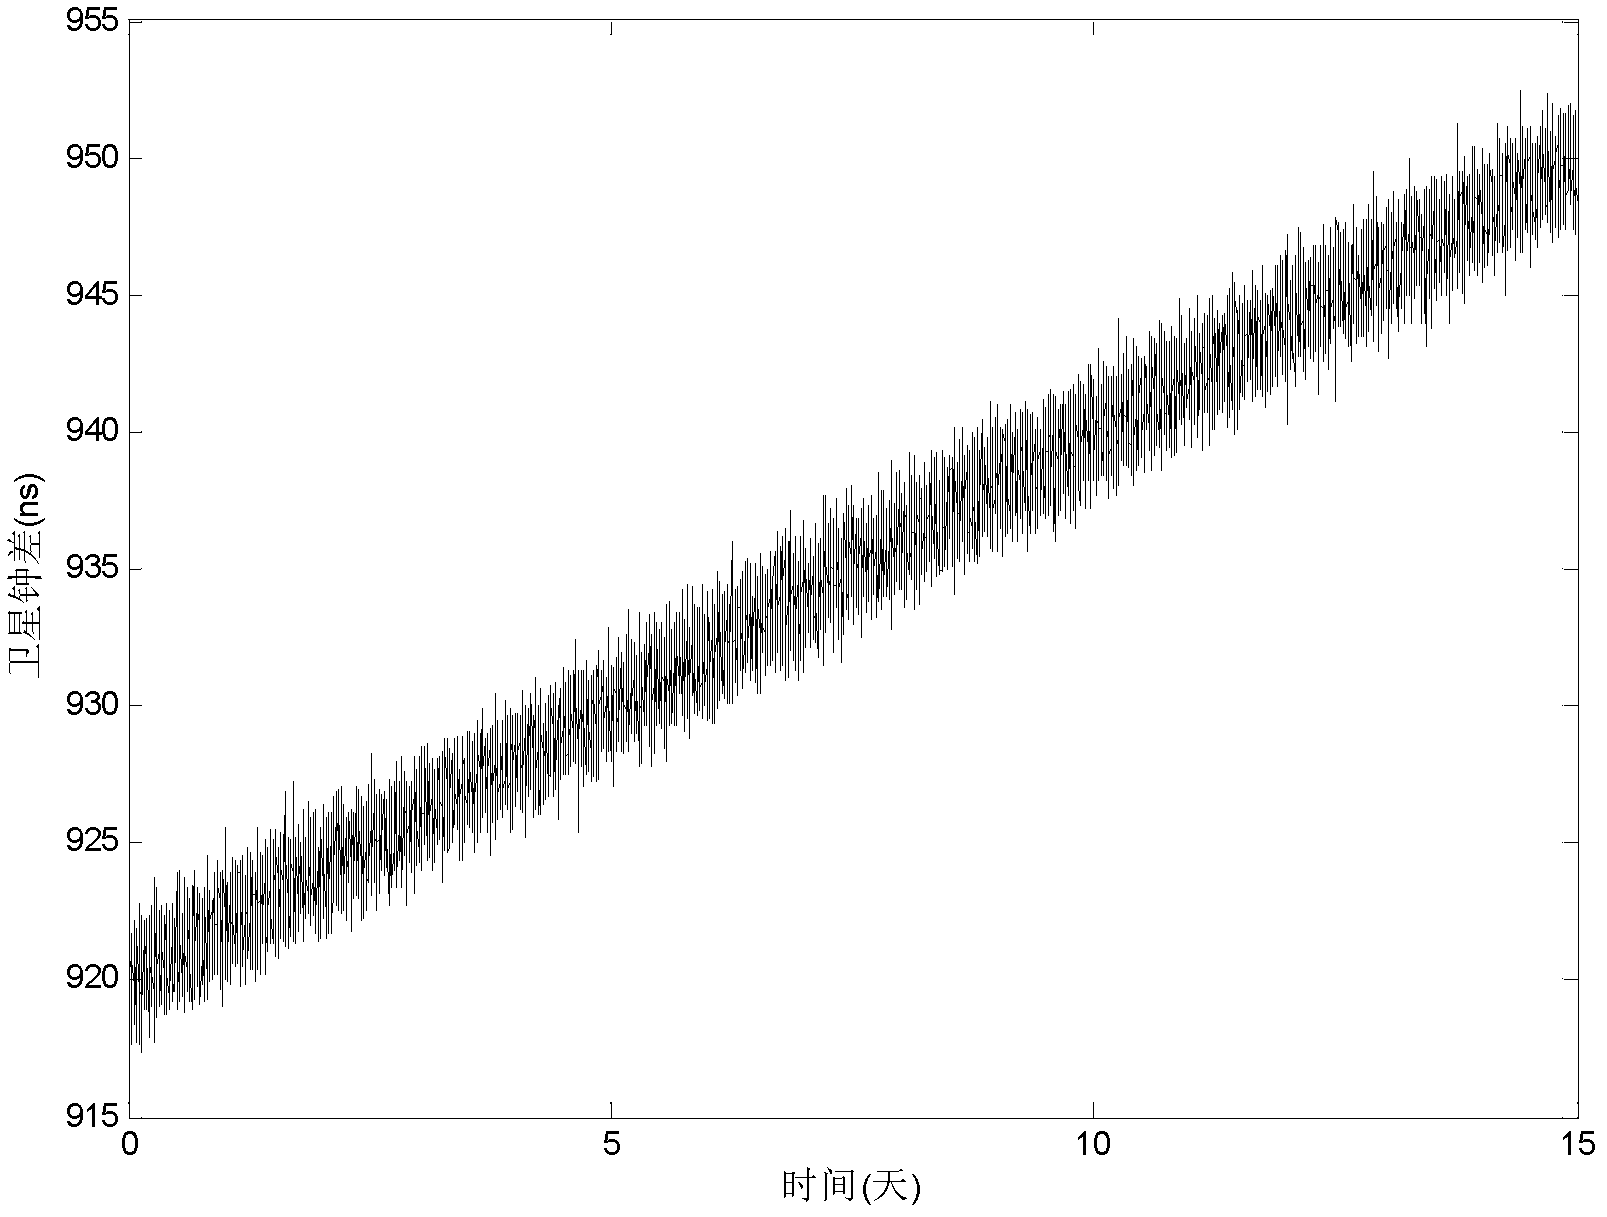 Satellite clock error prediction method based on empirical mode decomposition (EMD) model and generalized autoregressive conditional heteroskedasticity (GARCH) model